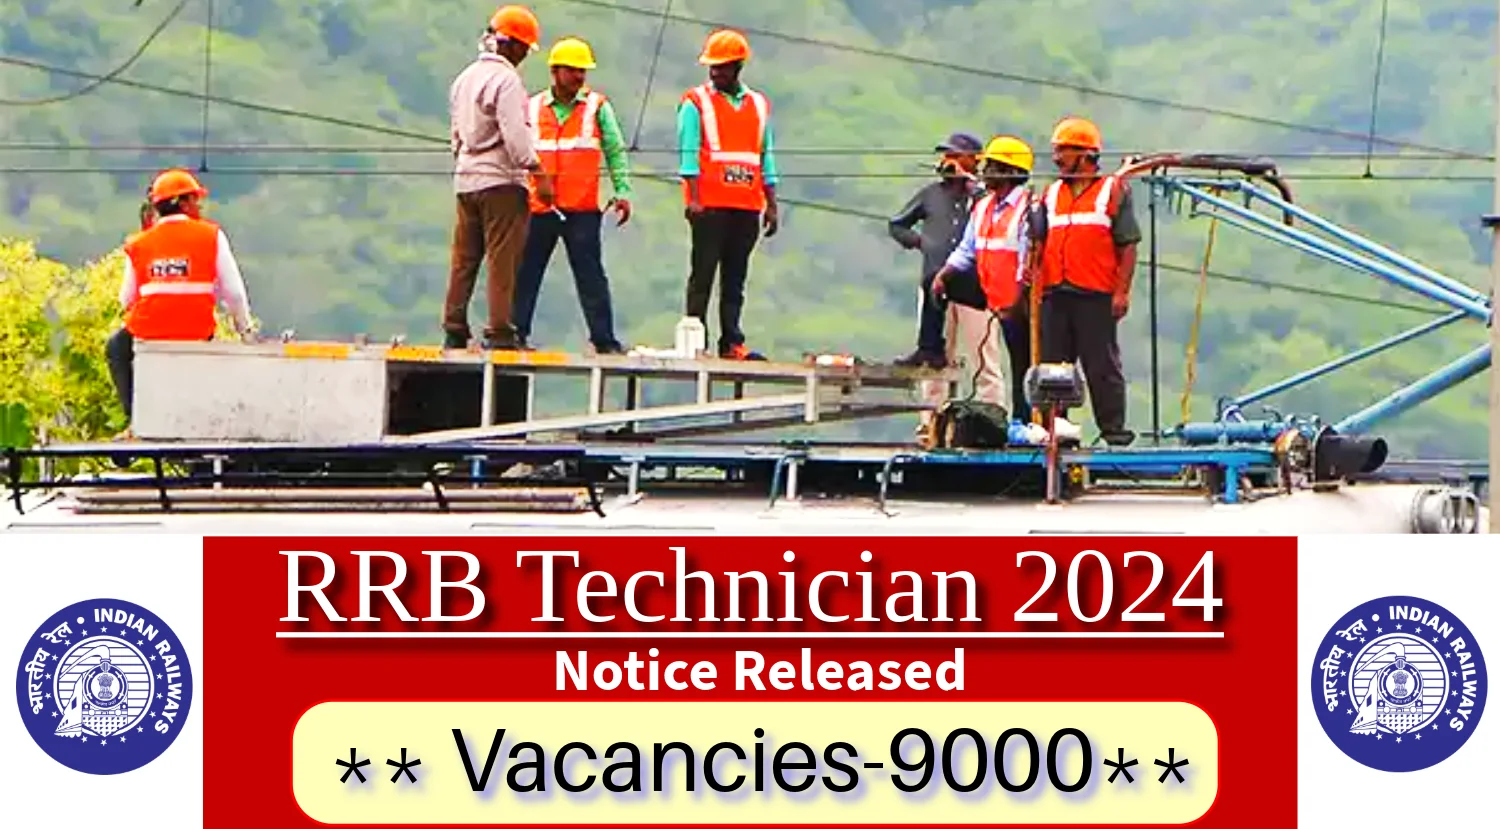 RRB Technician Recruitment 2024 for 9000 Vacancies Short Notice Released